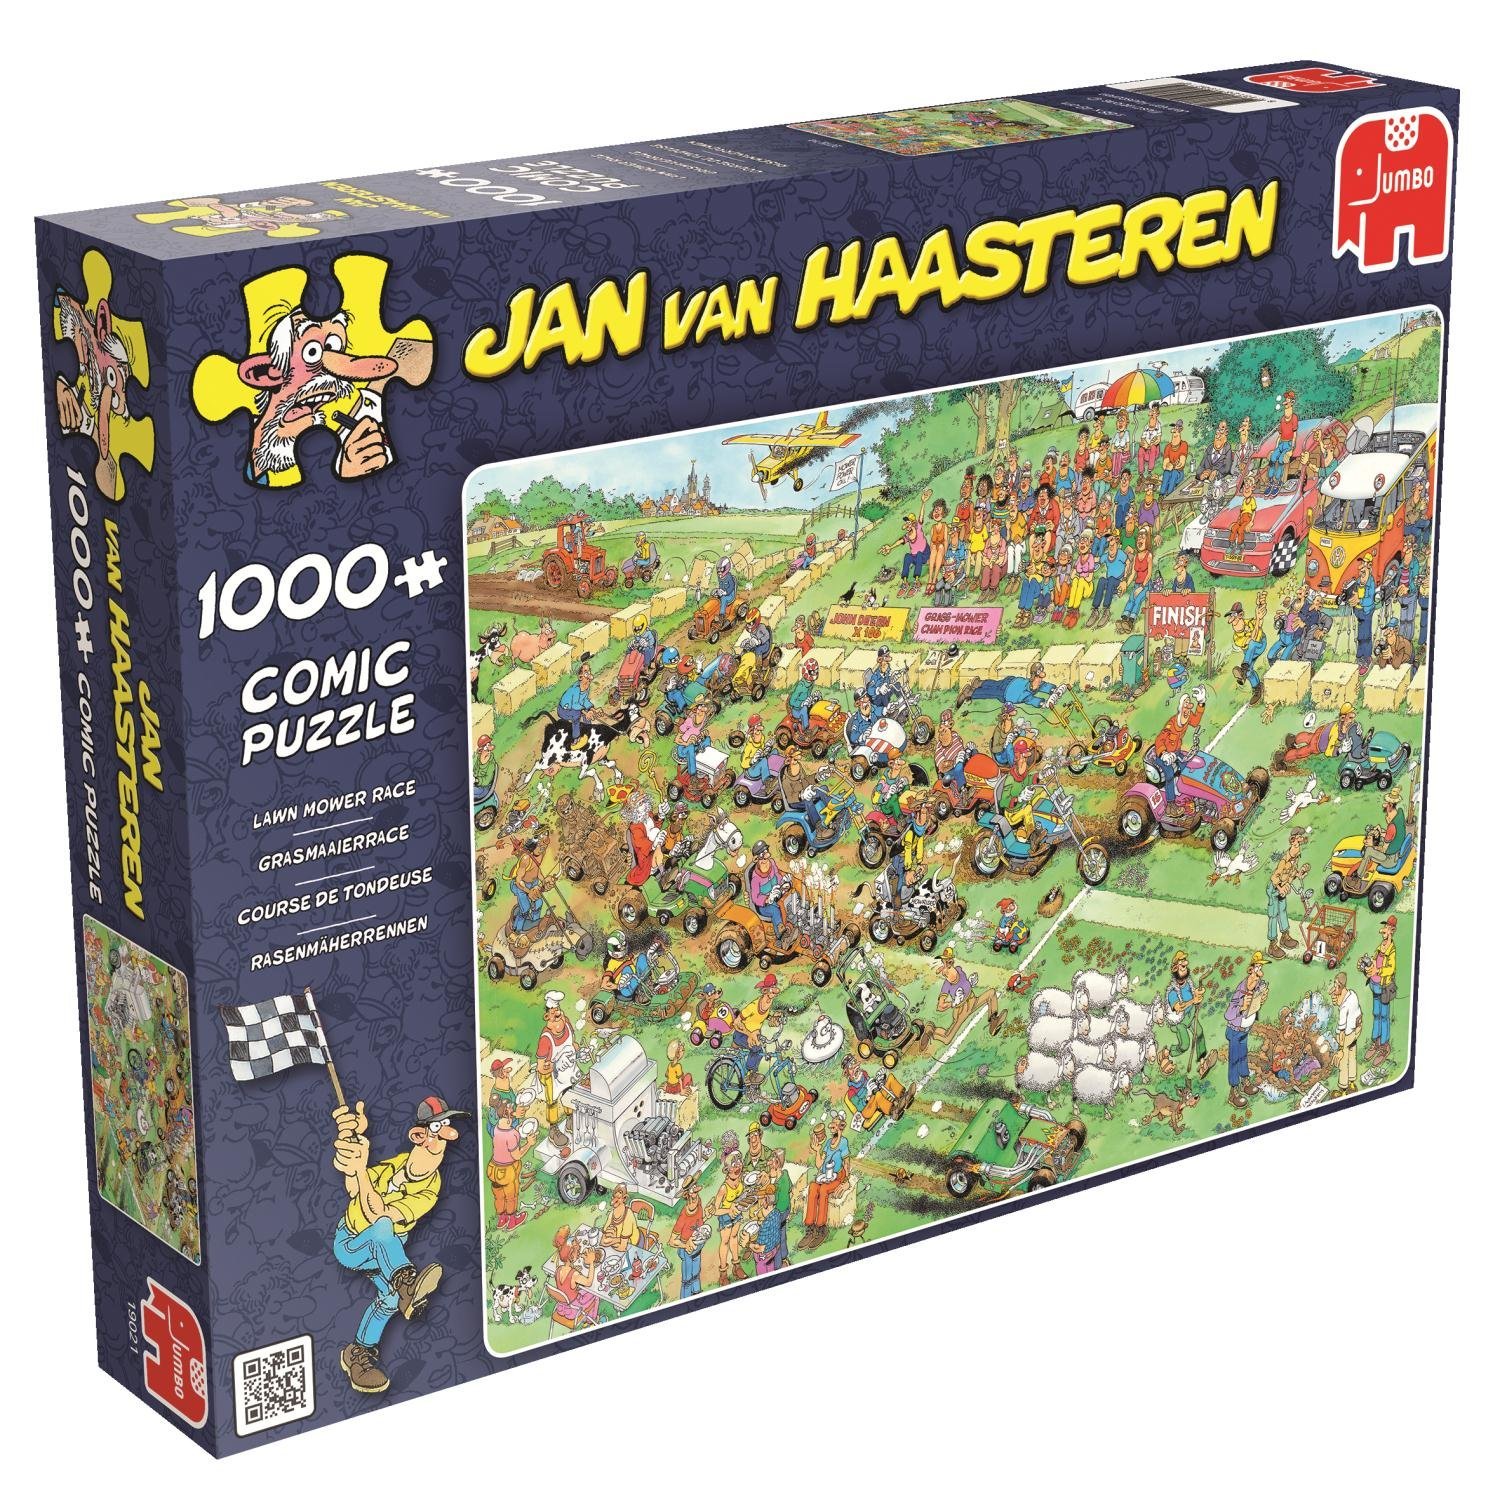  Jan Van Haasteren - Lawn Mower Race 1000 piece jigsaw puzzle